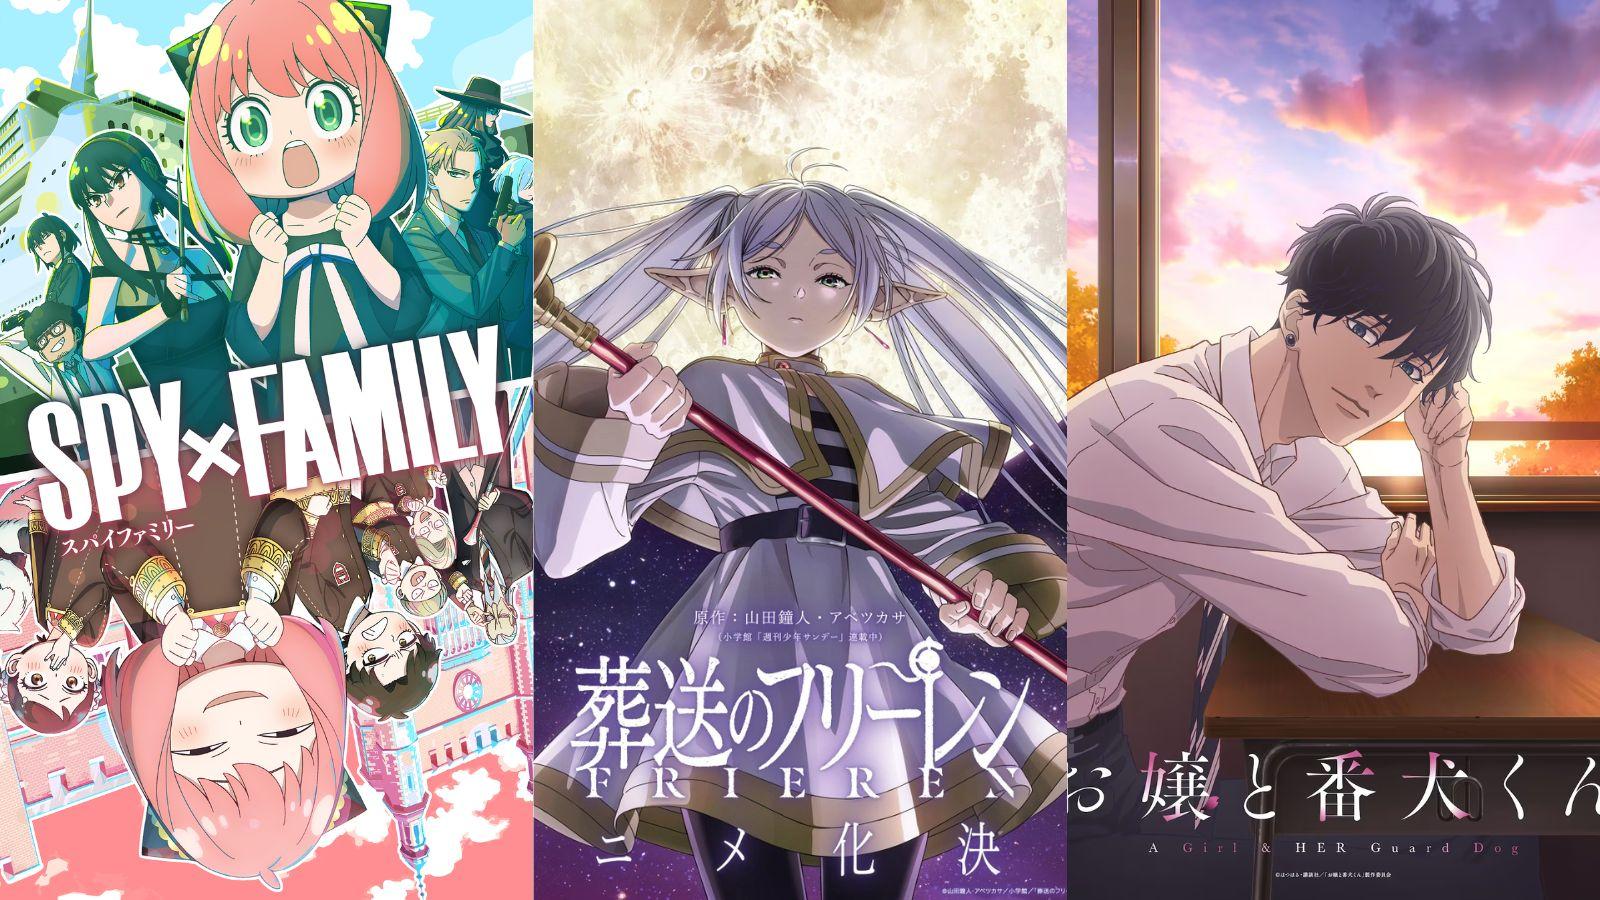 Best Boy Ranking: Summer 2023 Anime Season - Anime Corner